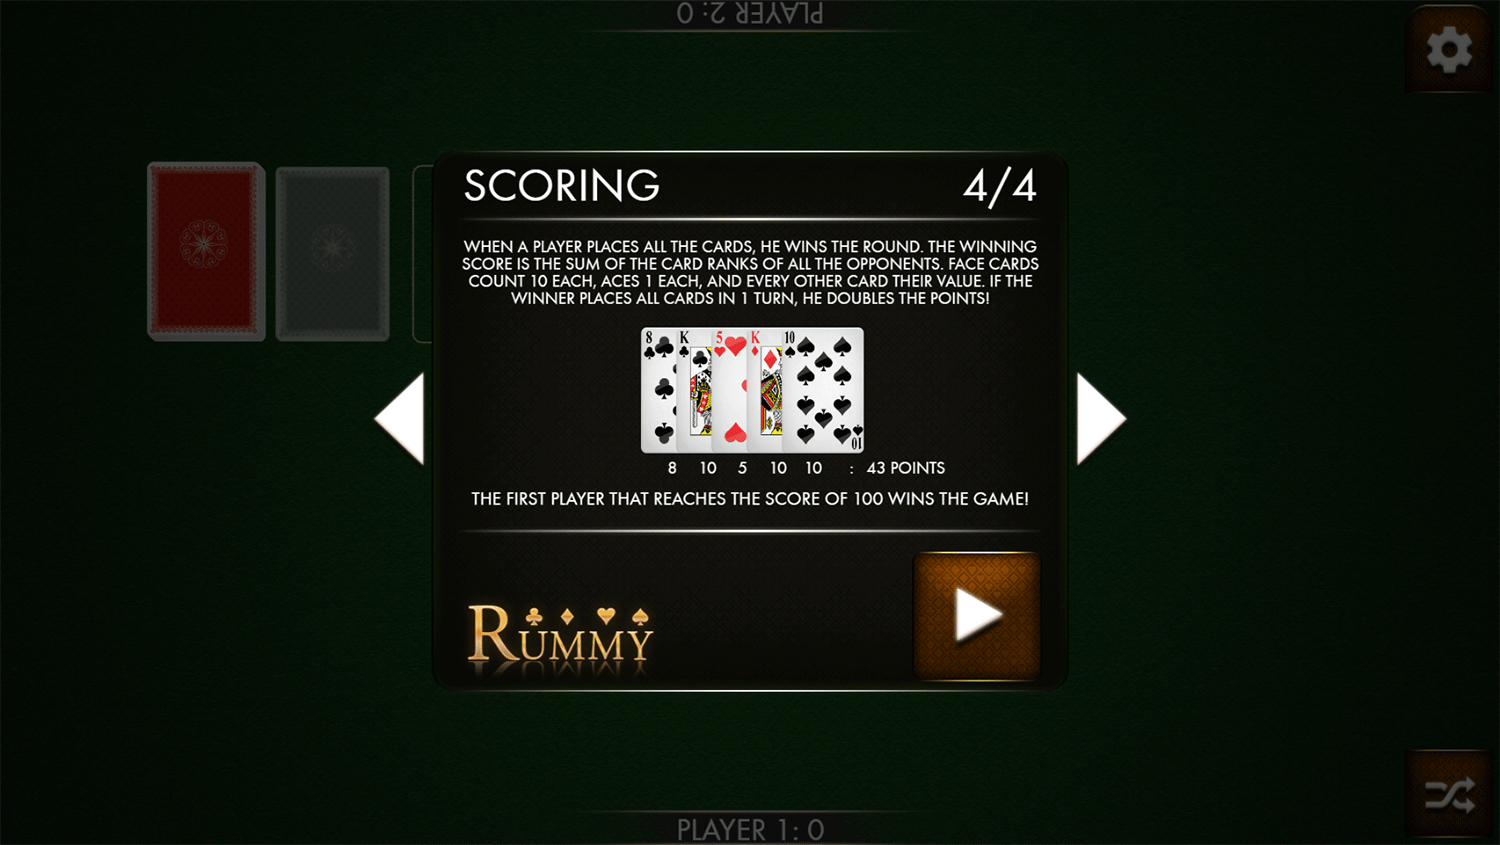 Rummy Game Scoring Rules Screenshot.